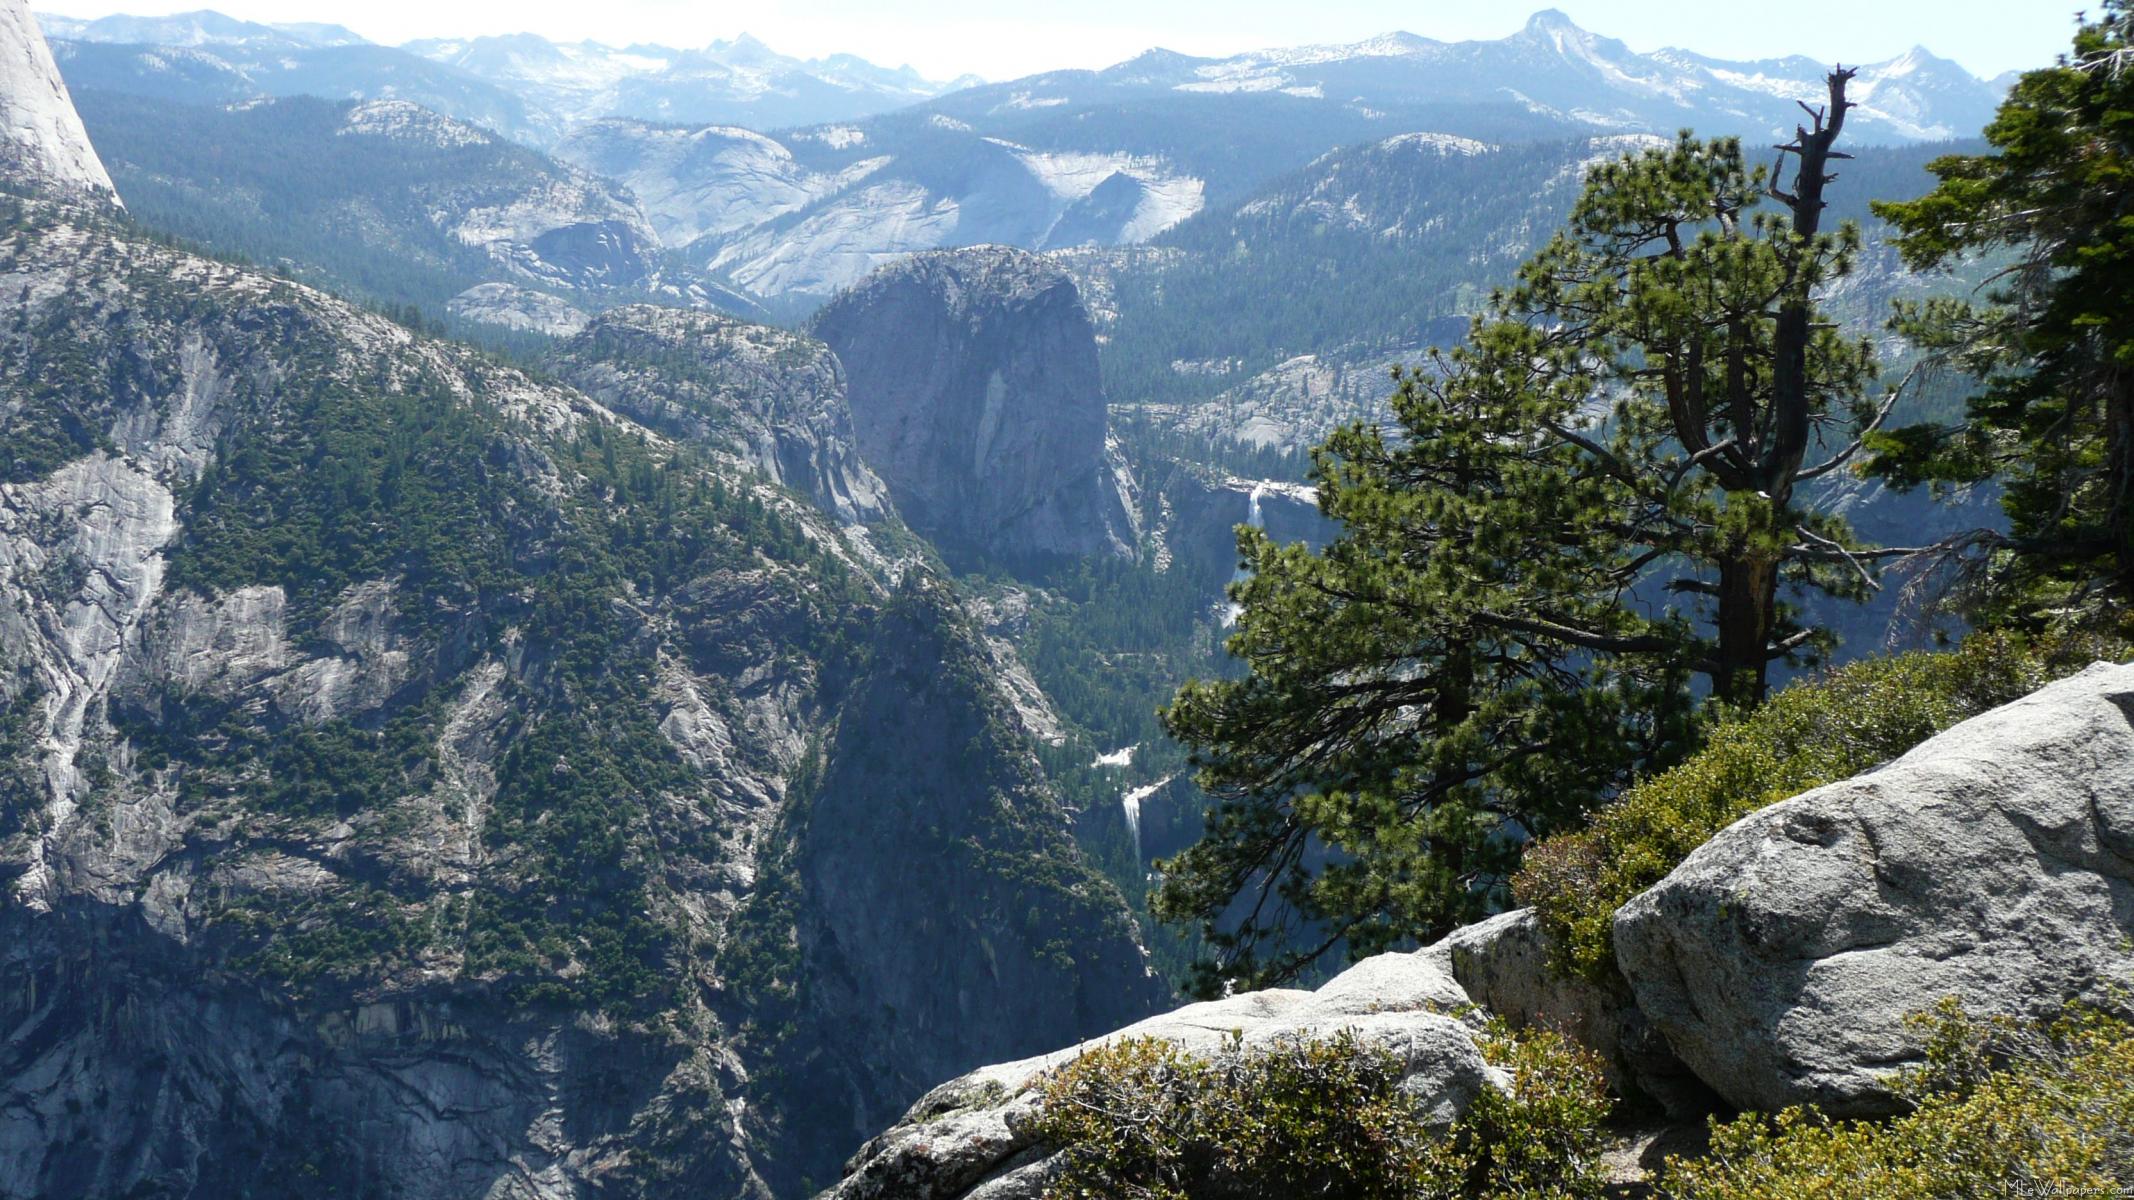 MLeWallpapers.com - Yosemite Mountain View